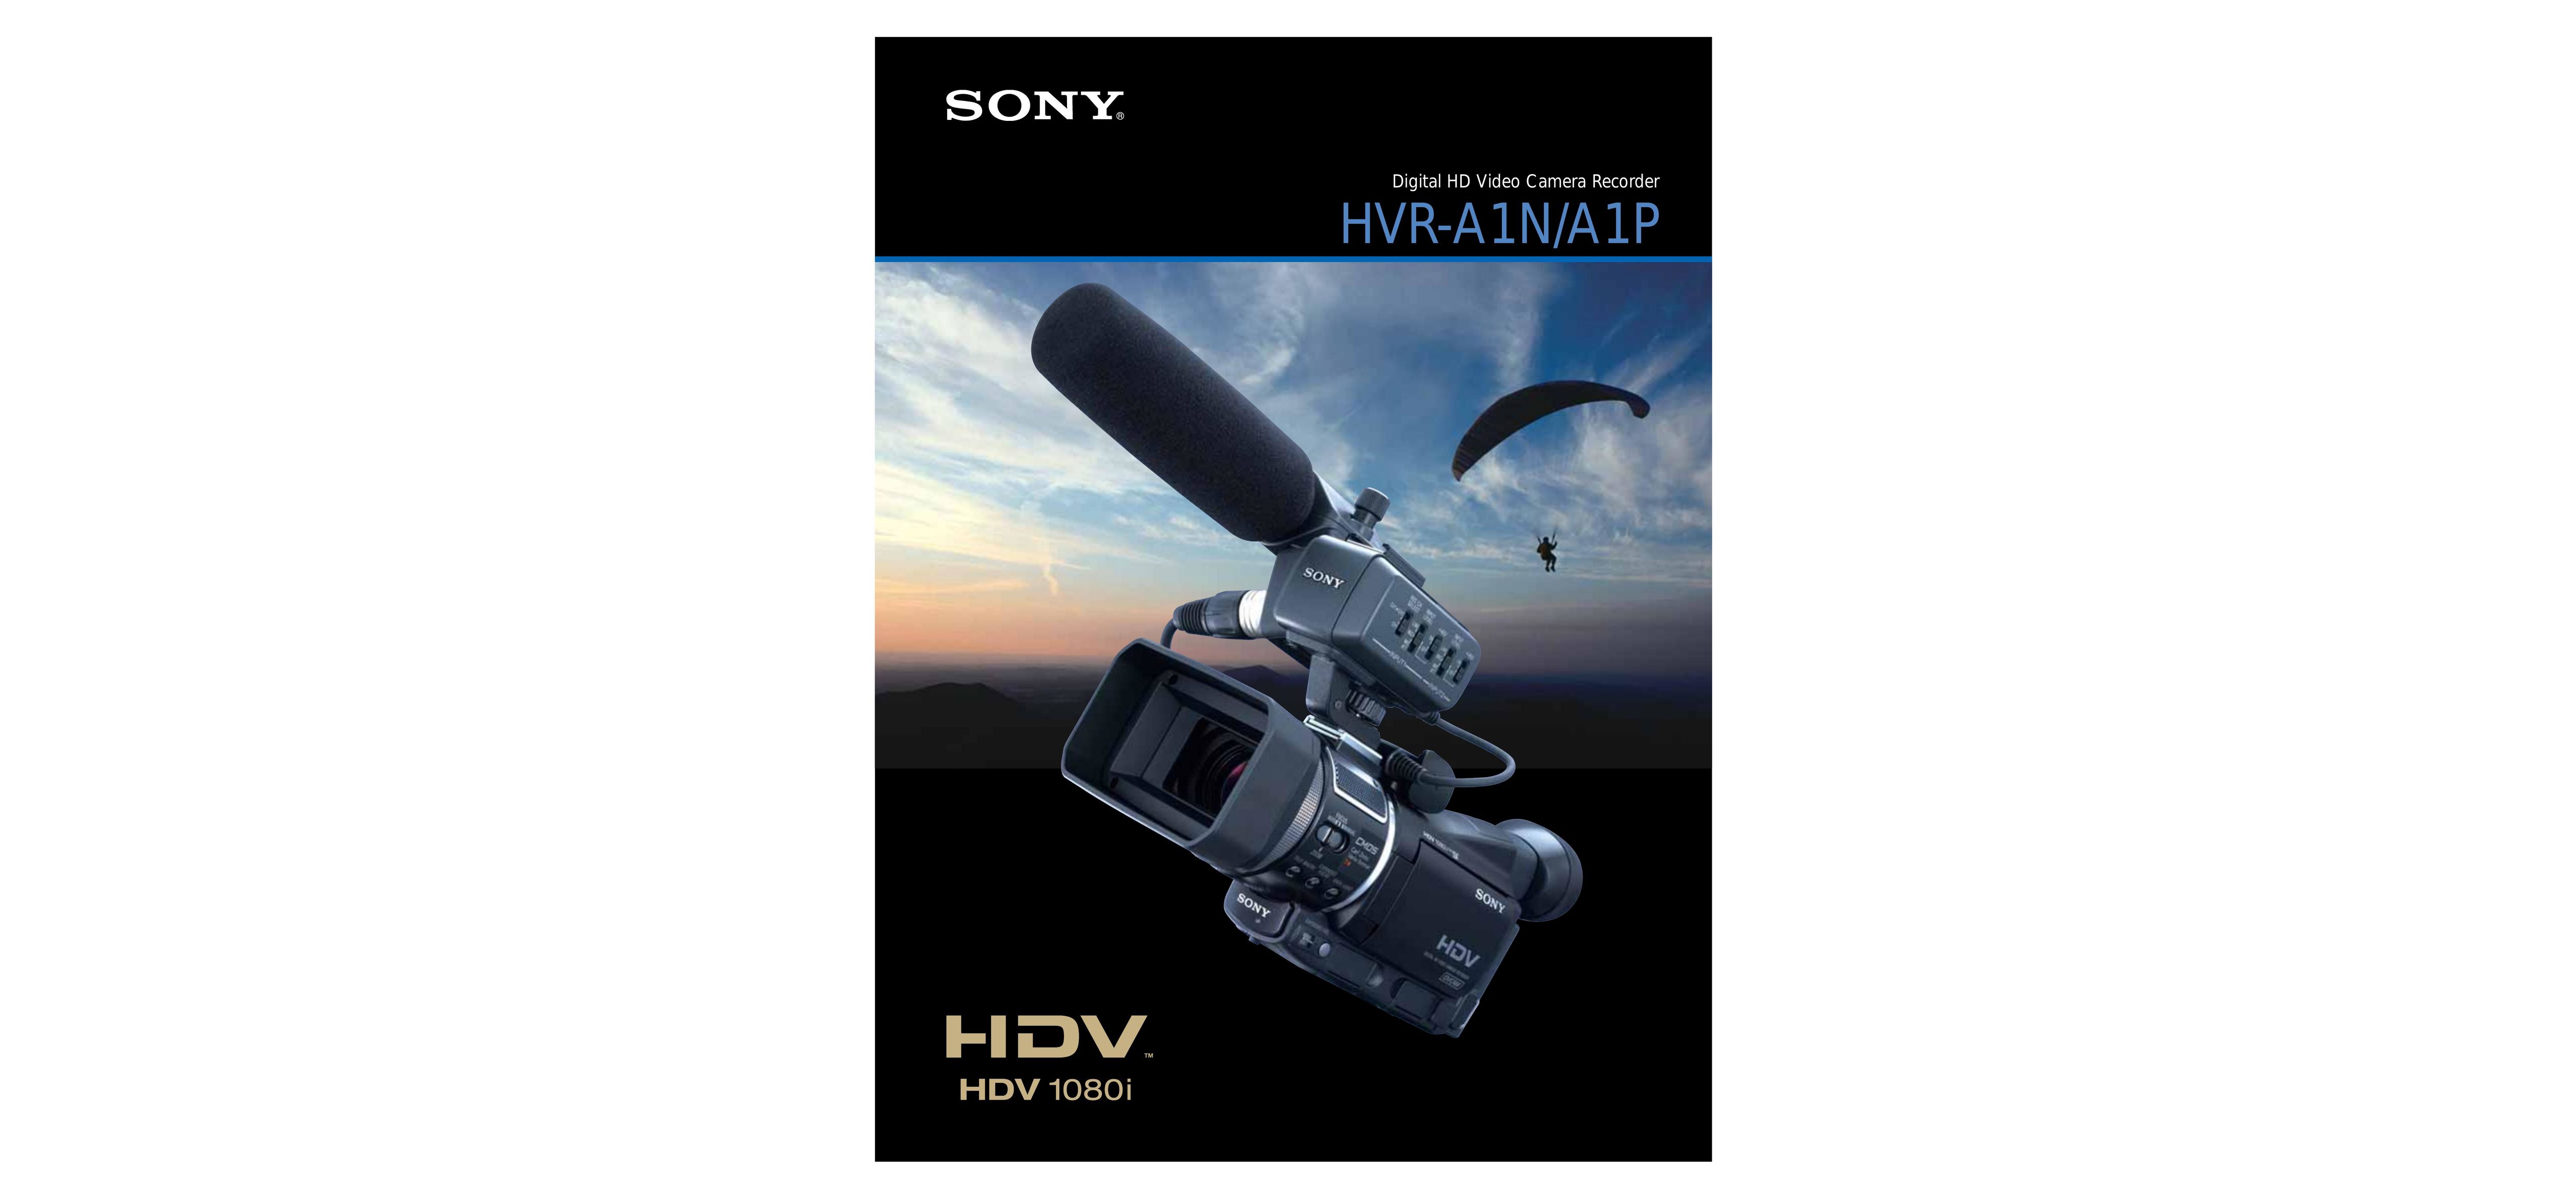 Sony HVR-A1P DVR User Manual